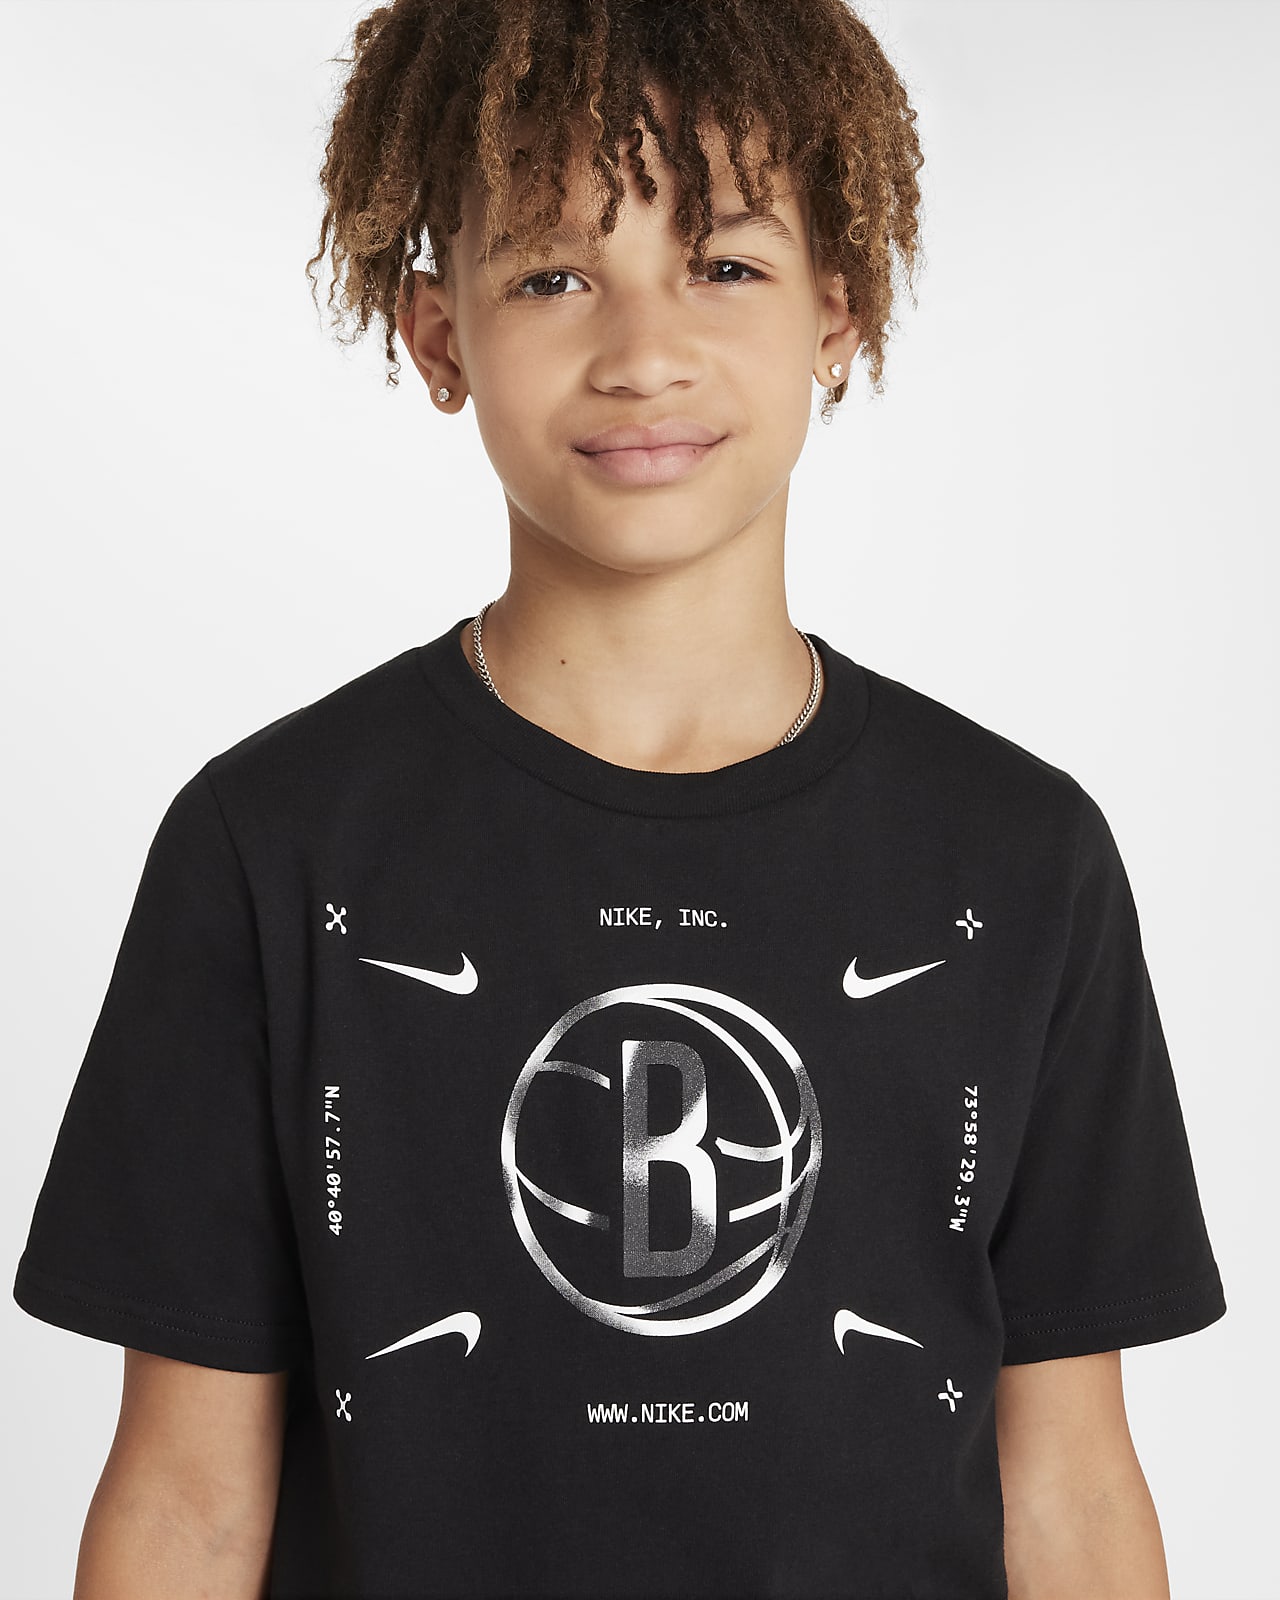 Brooklyn Nets Jordan Brand Kids Apparel, Kids Nets Clothing, Merchandise